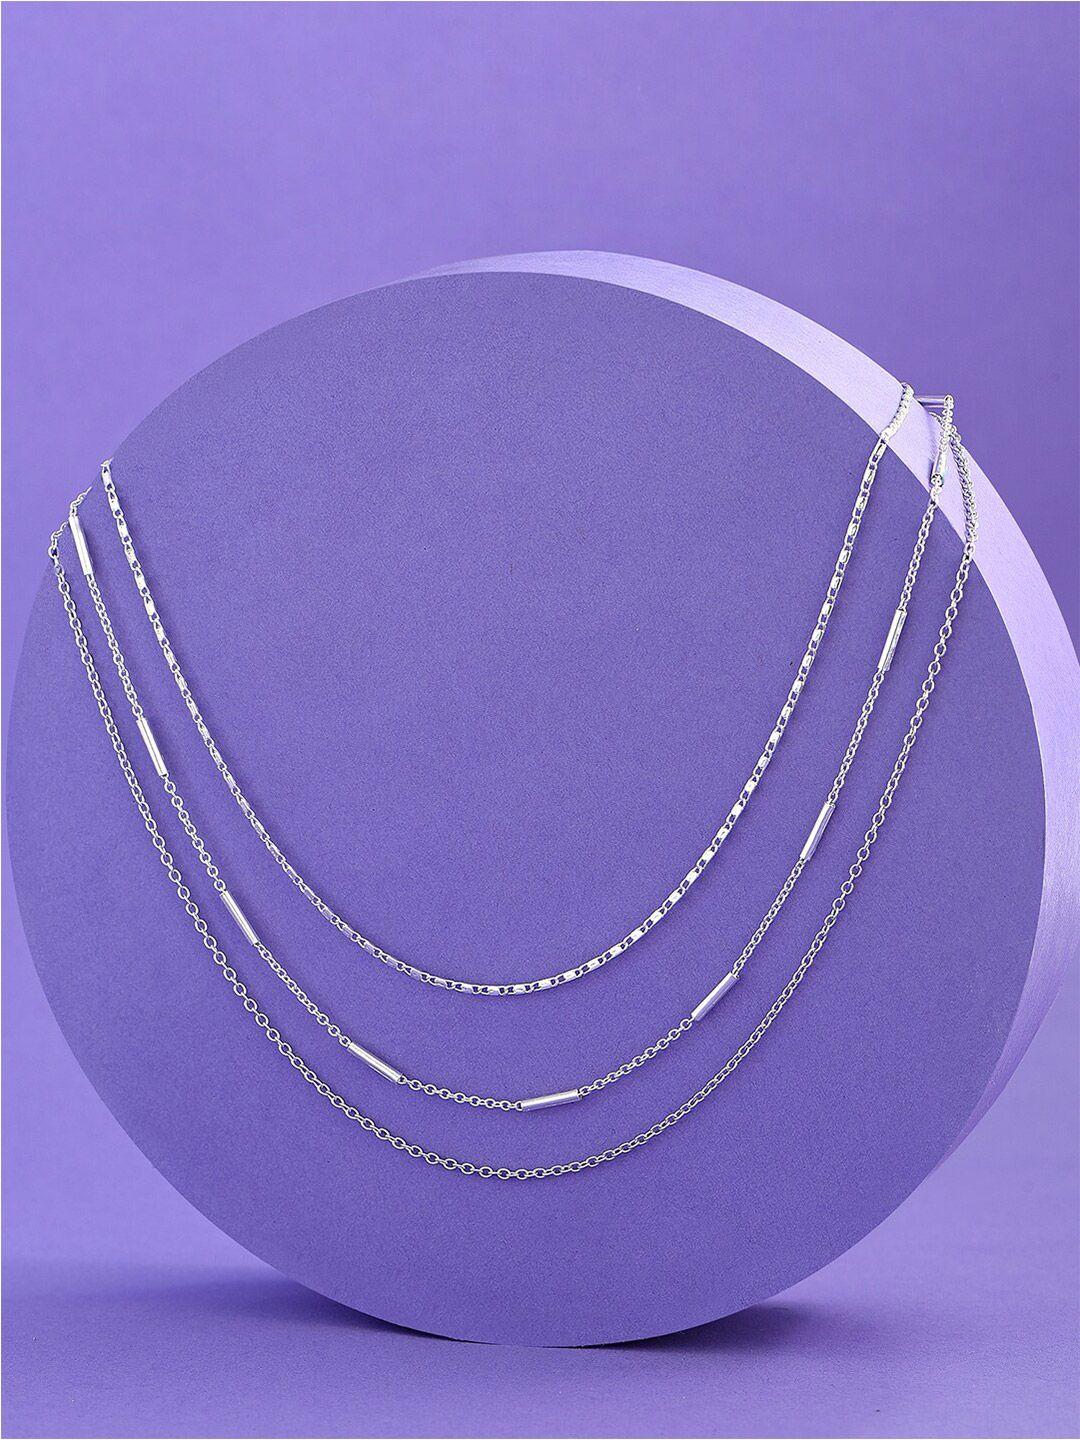 toniq silver-plated layered necklace